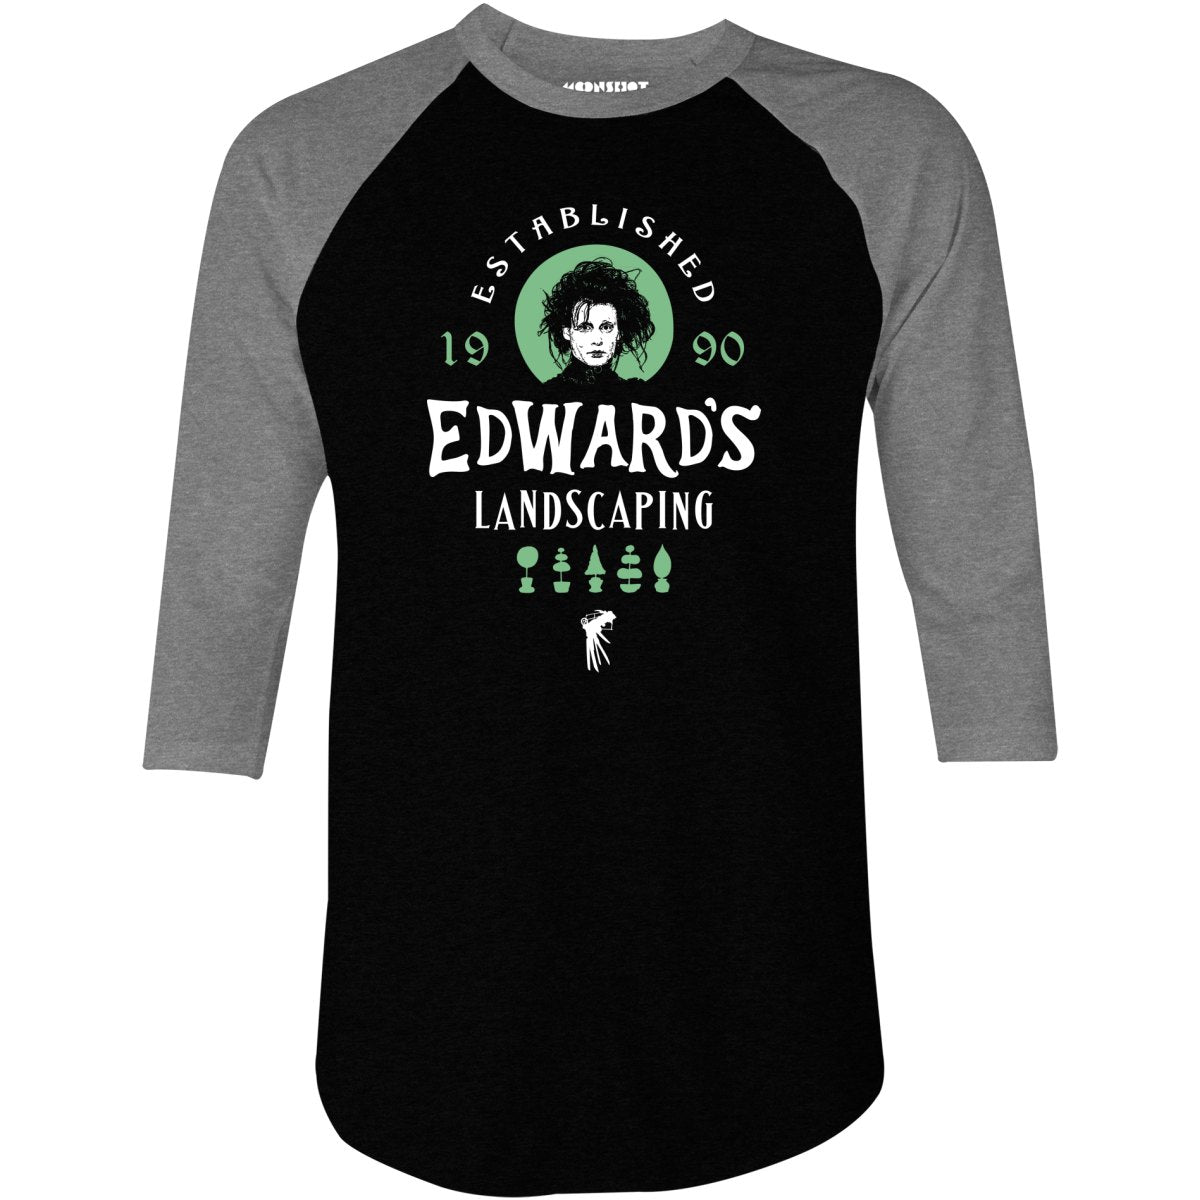 Edward's Landscaping - 3/4 Sleeve Raglan T-Shirt